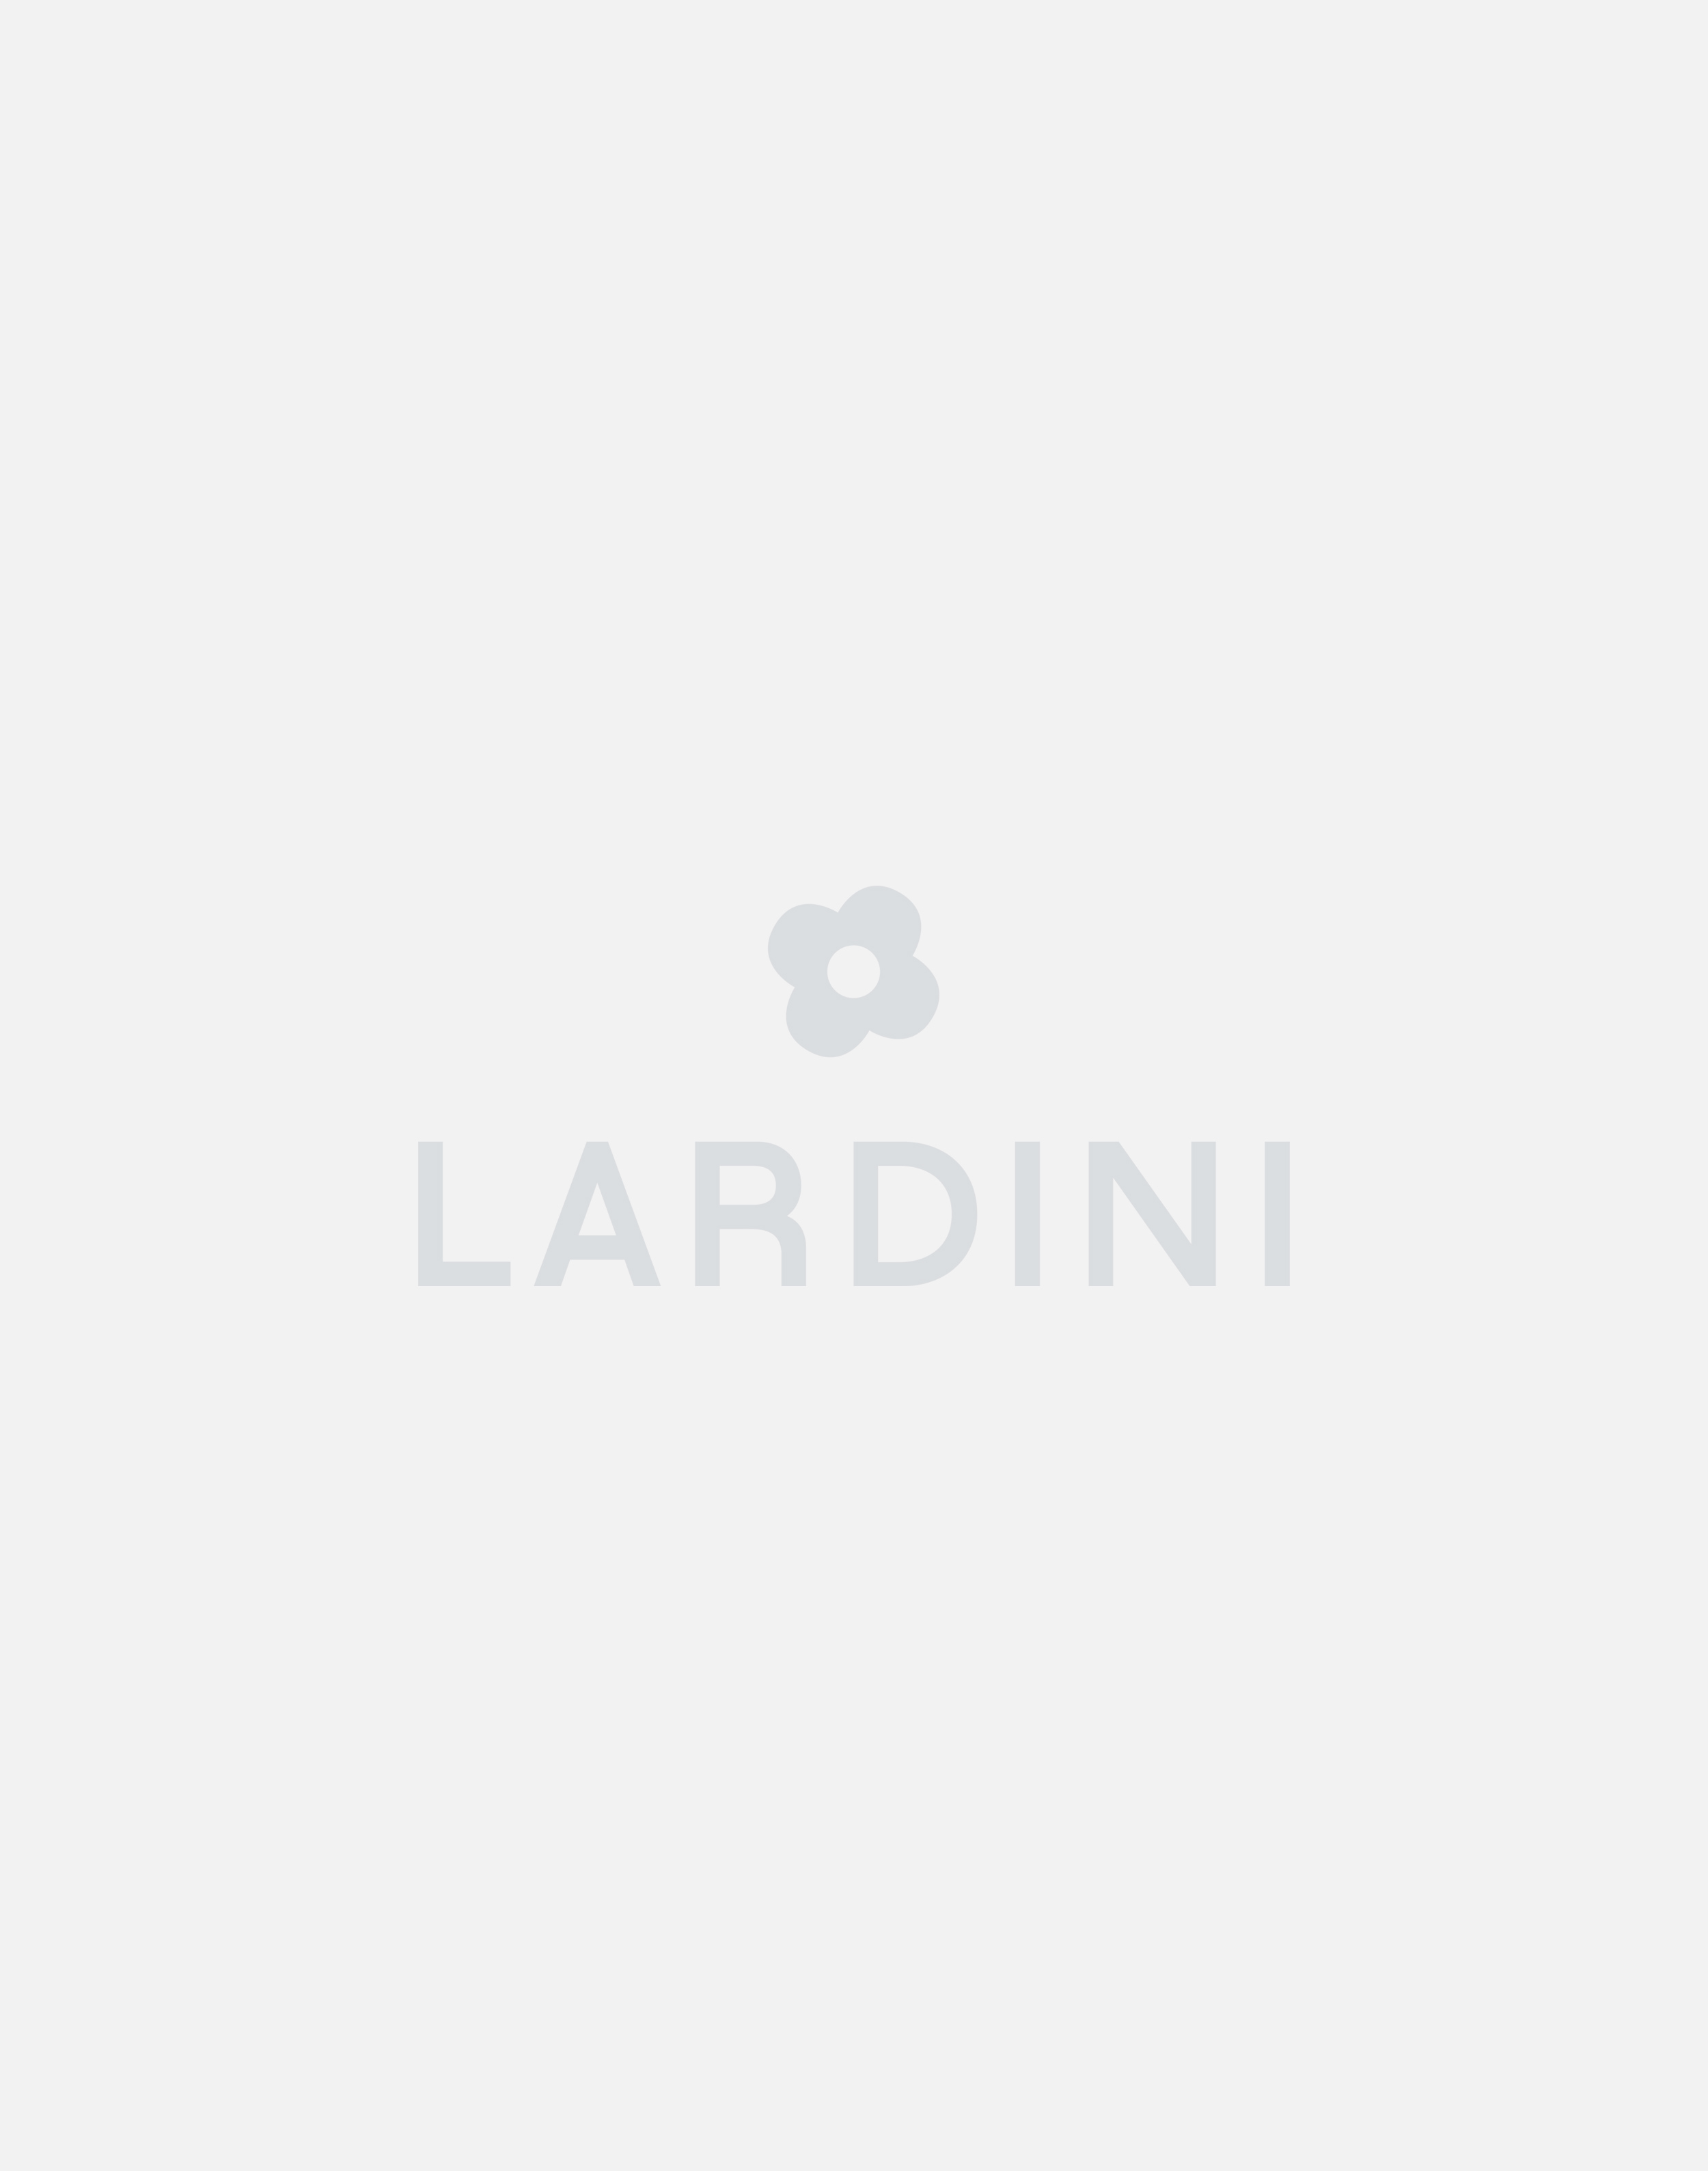 Scarf with geometric pattern - Luigi Lardini capsule 1